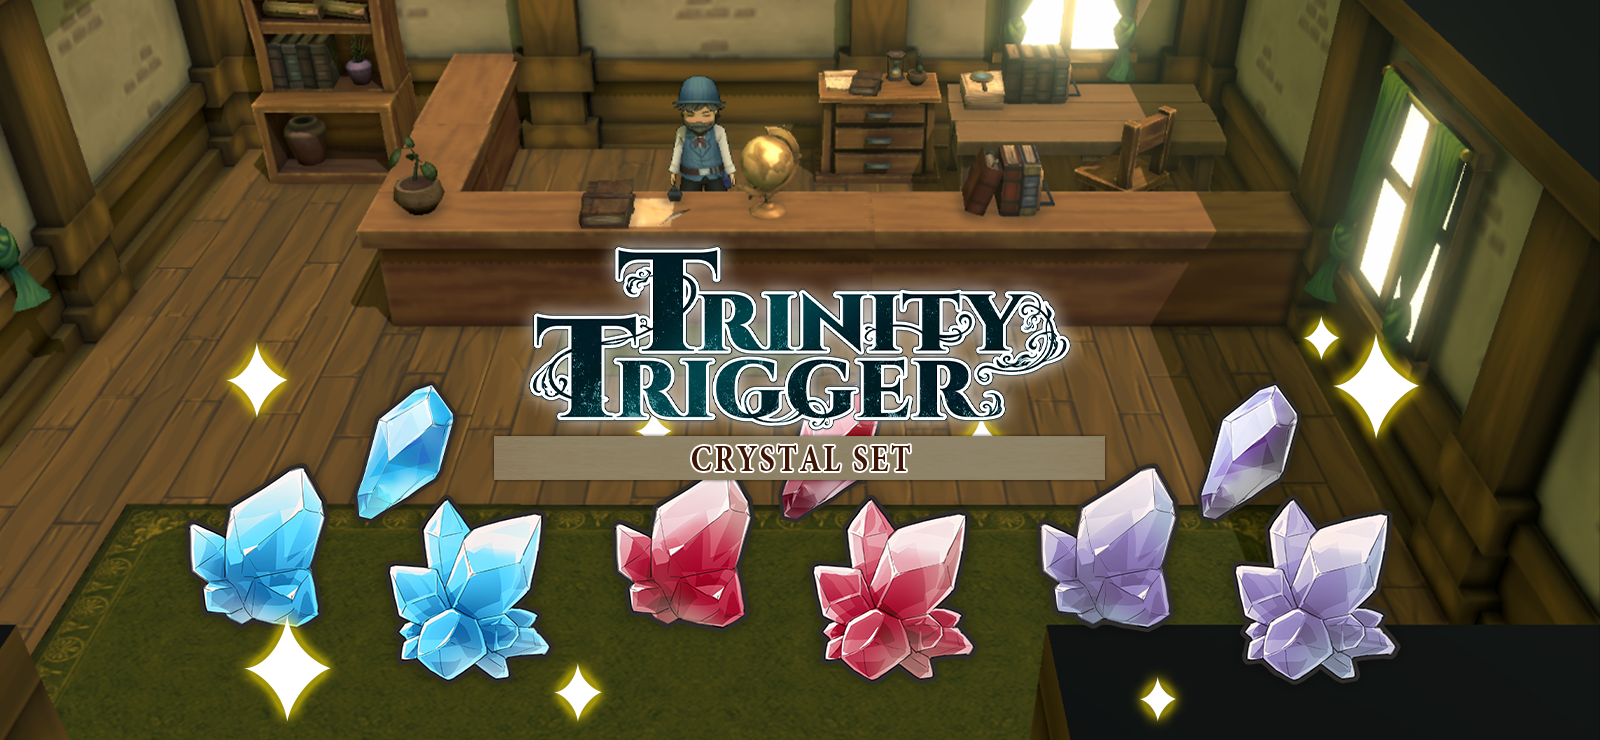 Trinity Trigger - Crystal Set